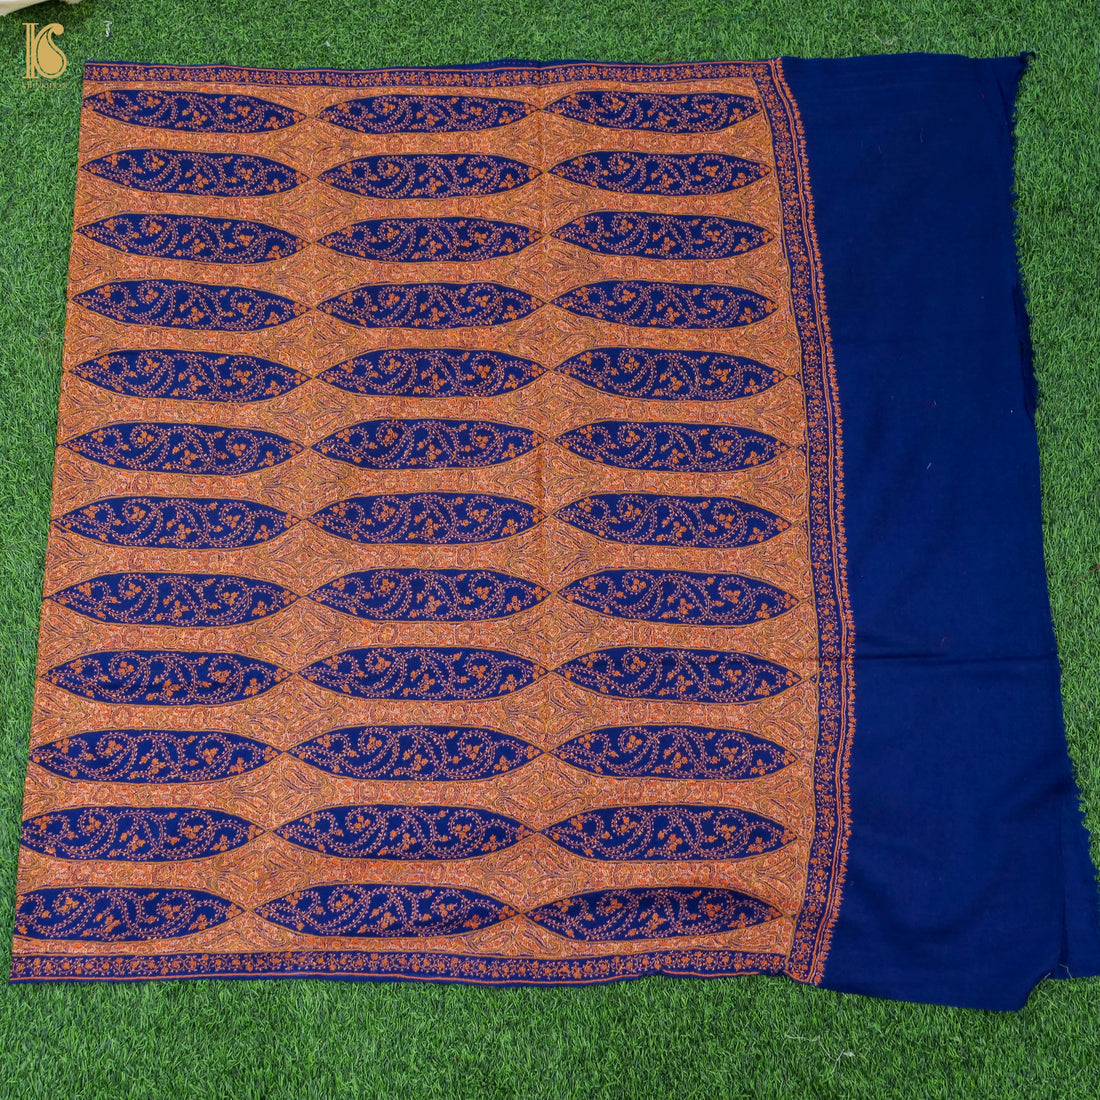 Blue Pashmina Sozni Hand Embroidery Kashmiri Paisely Shawl - Khinkhwab